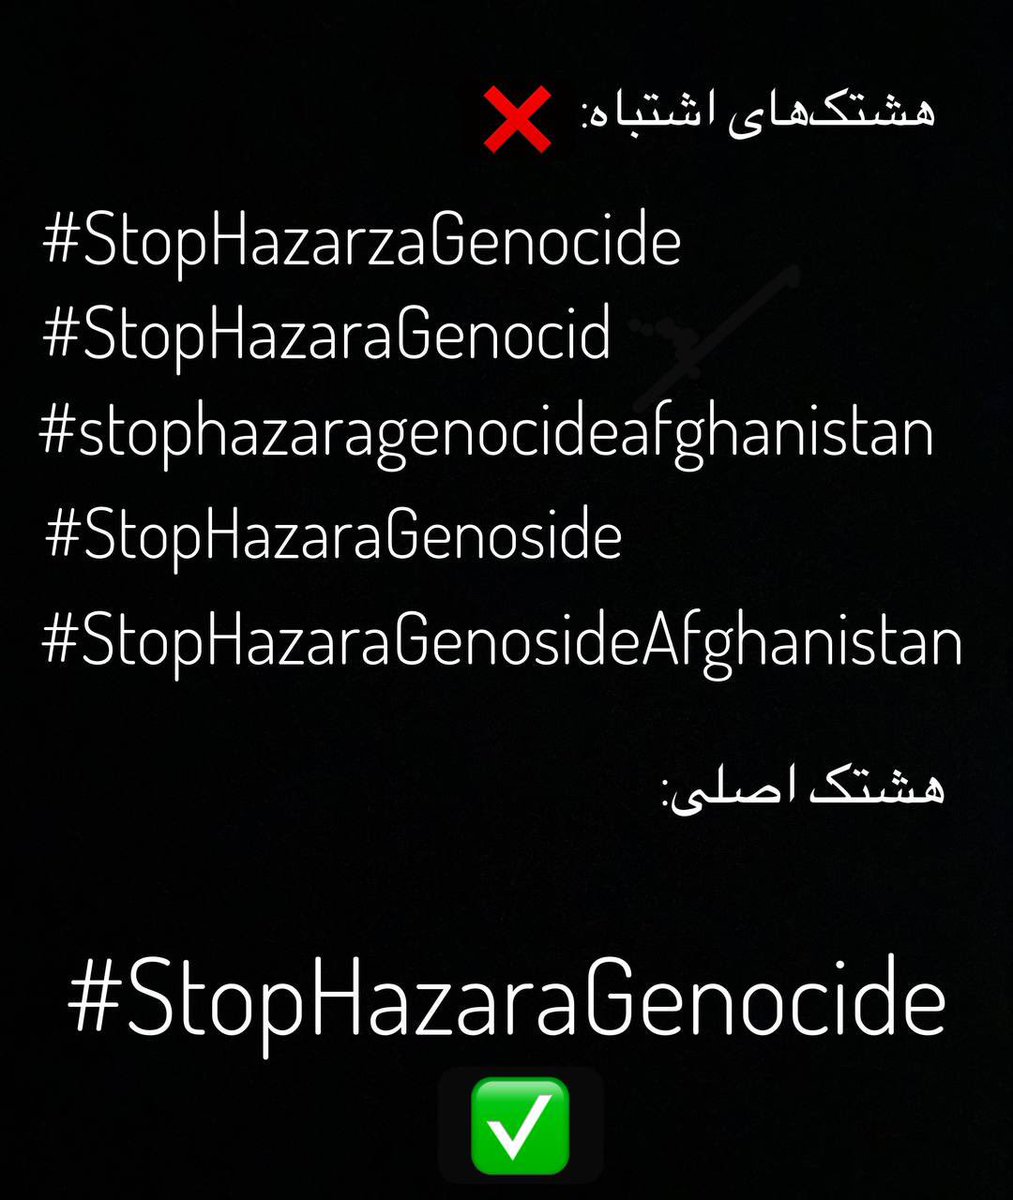 @womenaidafghan1 @zala_zazai @Maryam__Azizi @AWC4C @WomenforWomen @Womensvoices24 @UN @NRFafg @AWCSWO @sumaiafrotan @AfgWomen4Peace The right hashtag #️⃣ with one 'N'
#StopHazaraGenocide